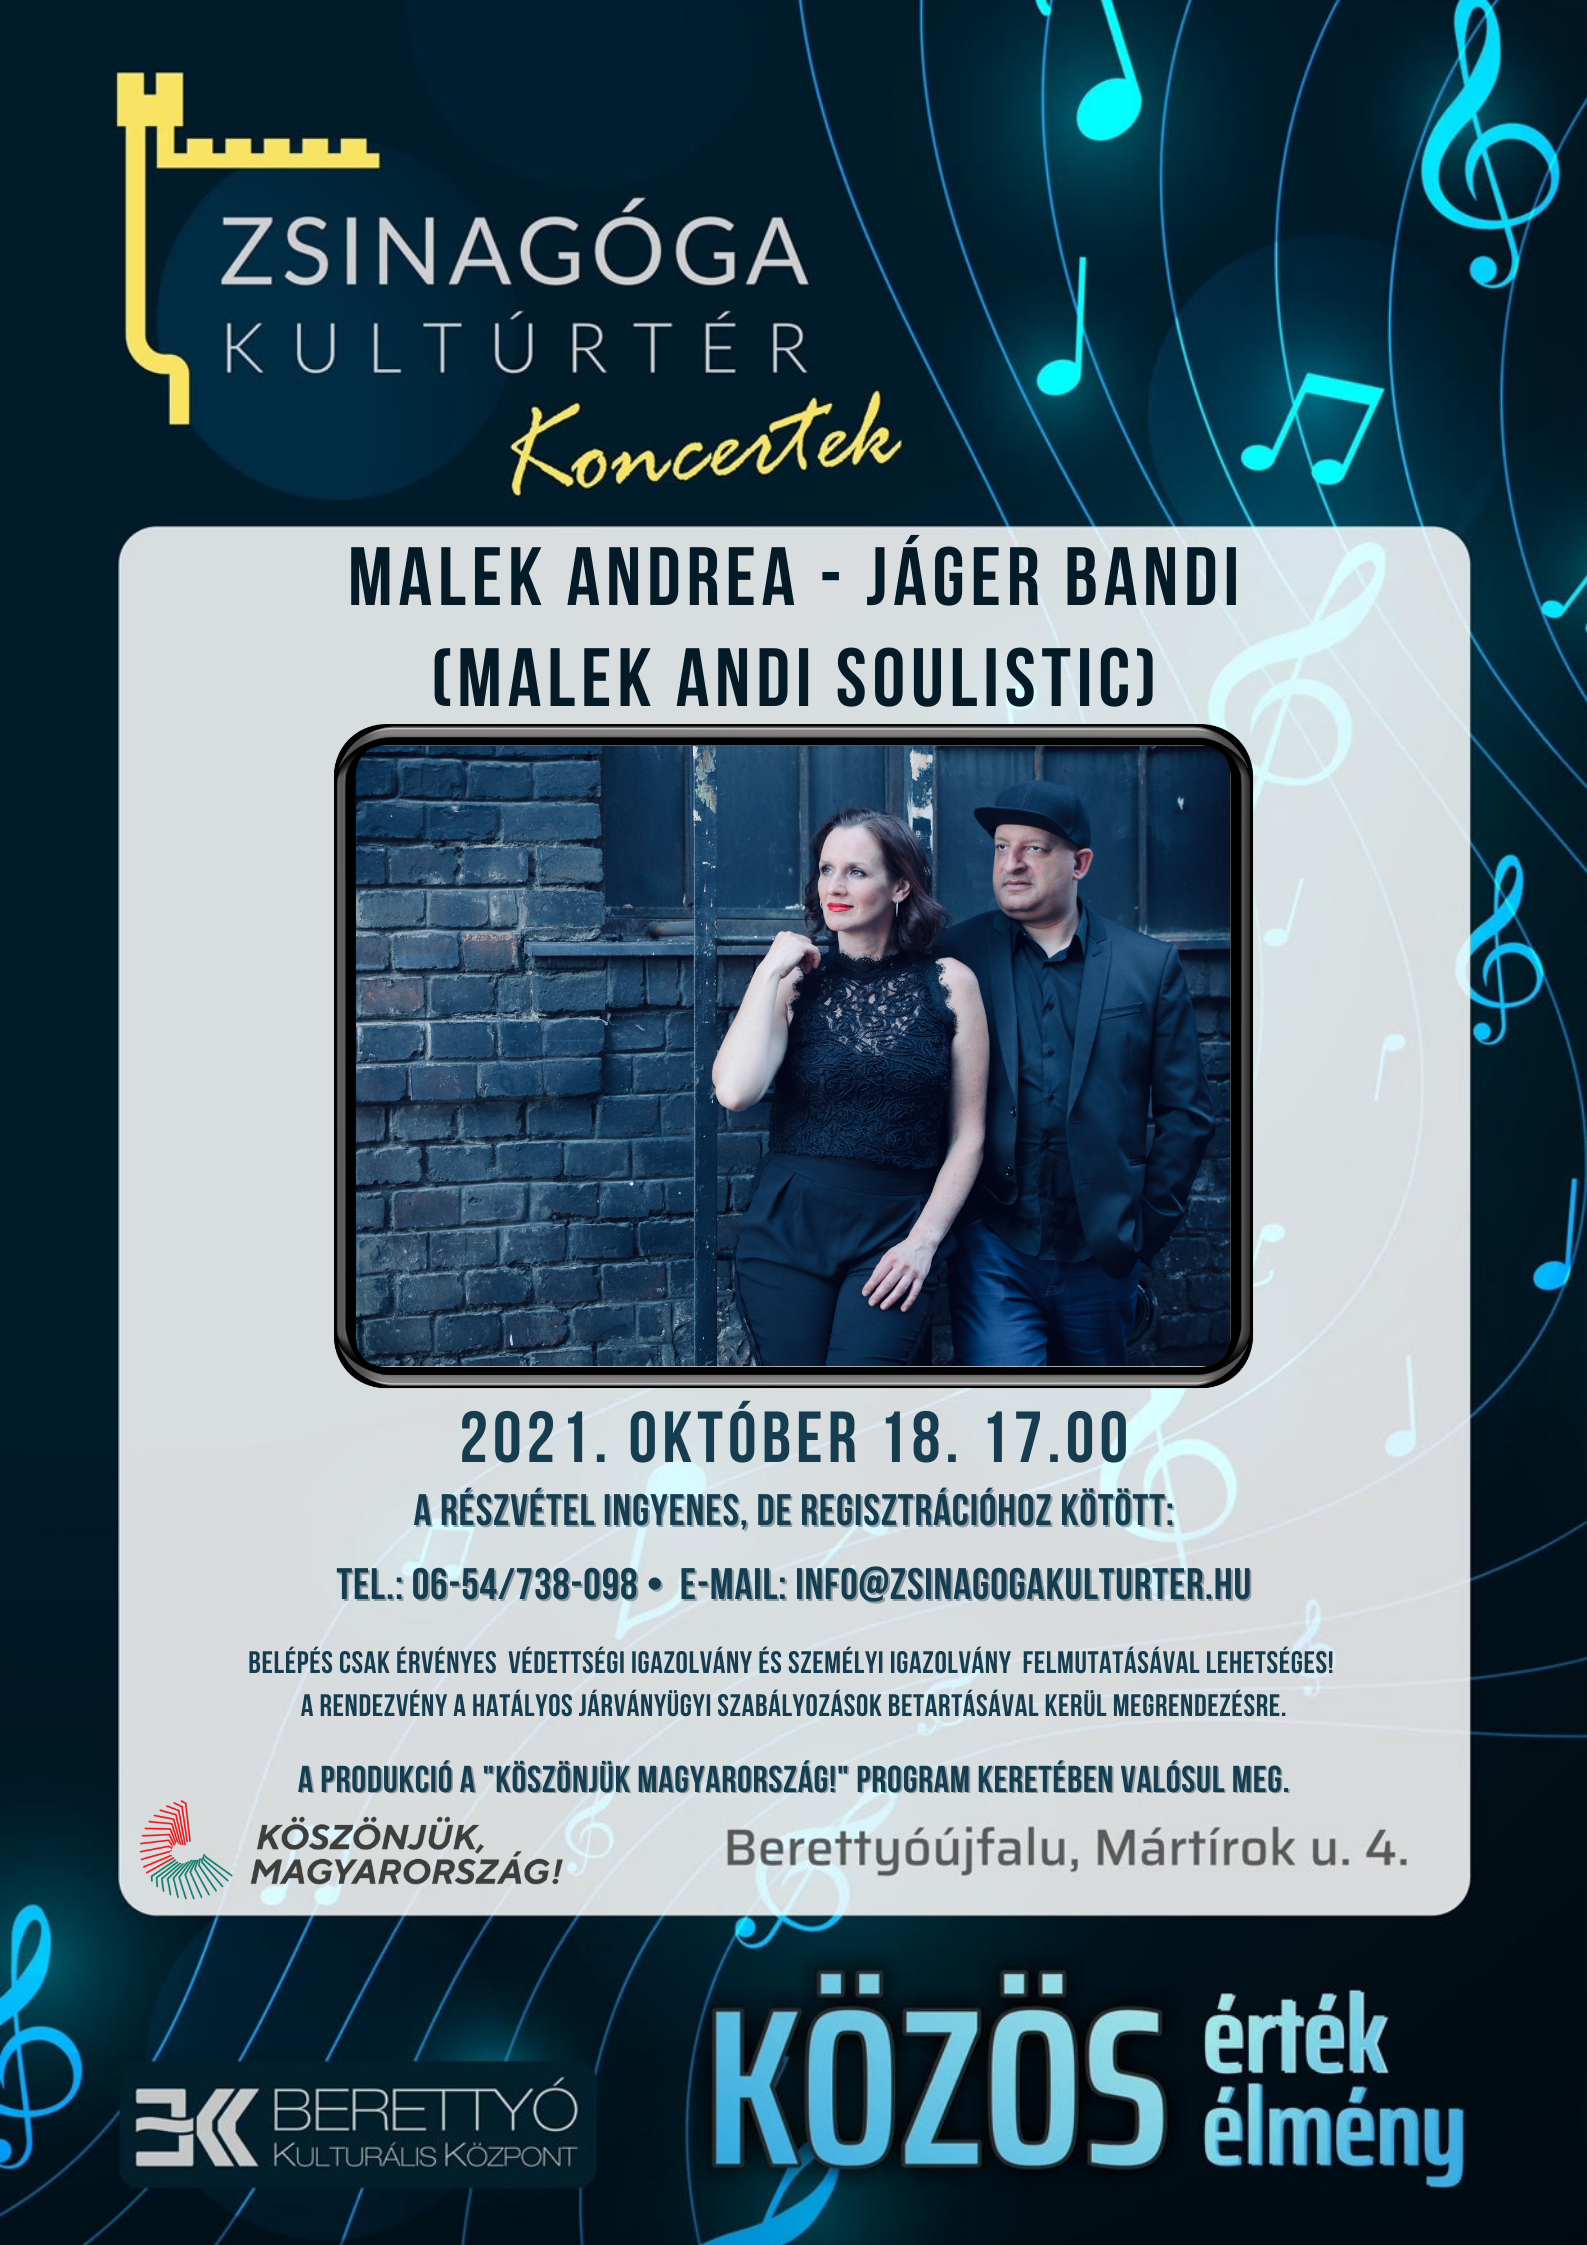 Zsinagóga Kultúrtér Koncertek - Malek Andi Soulistic